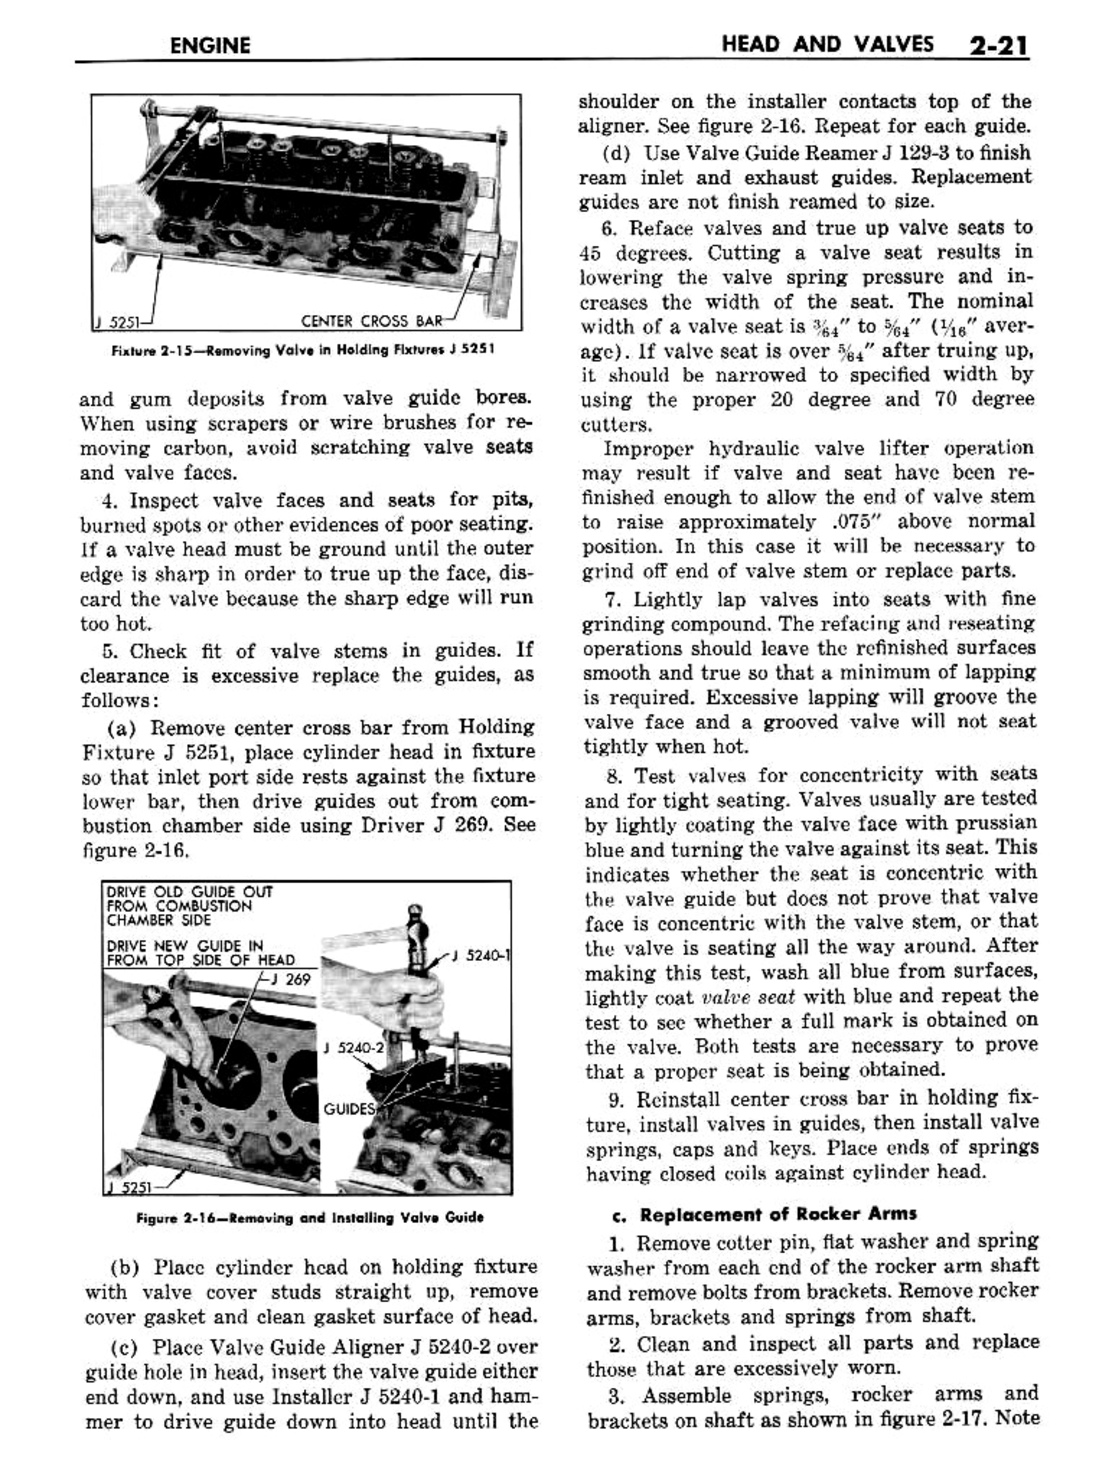 n_03 1957 Buick Shop Manual - Engine-021-021.jpg